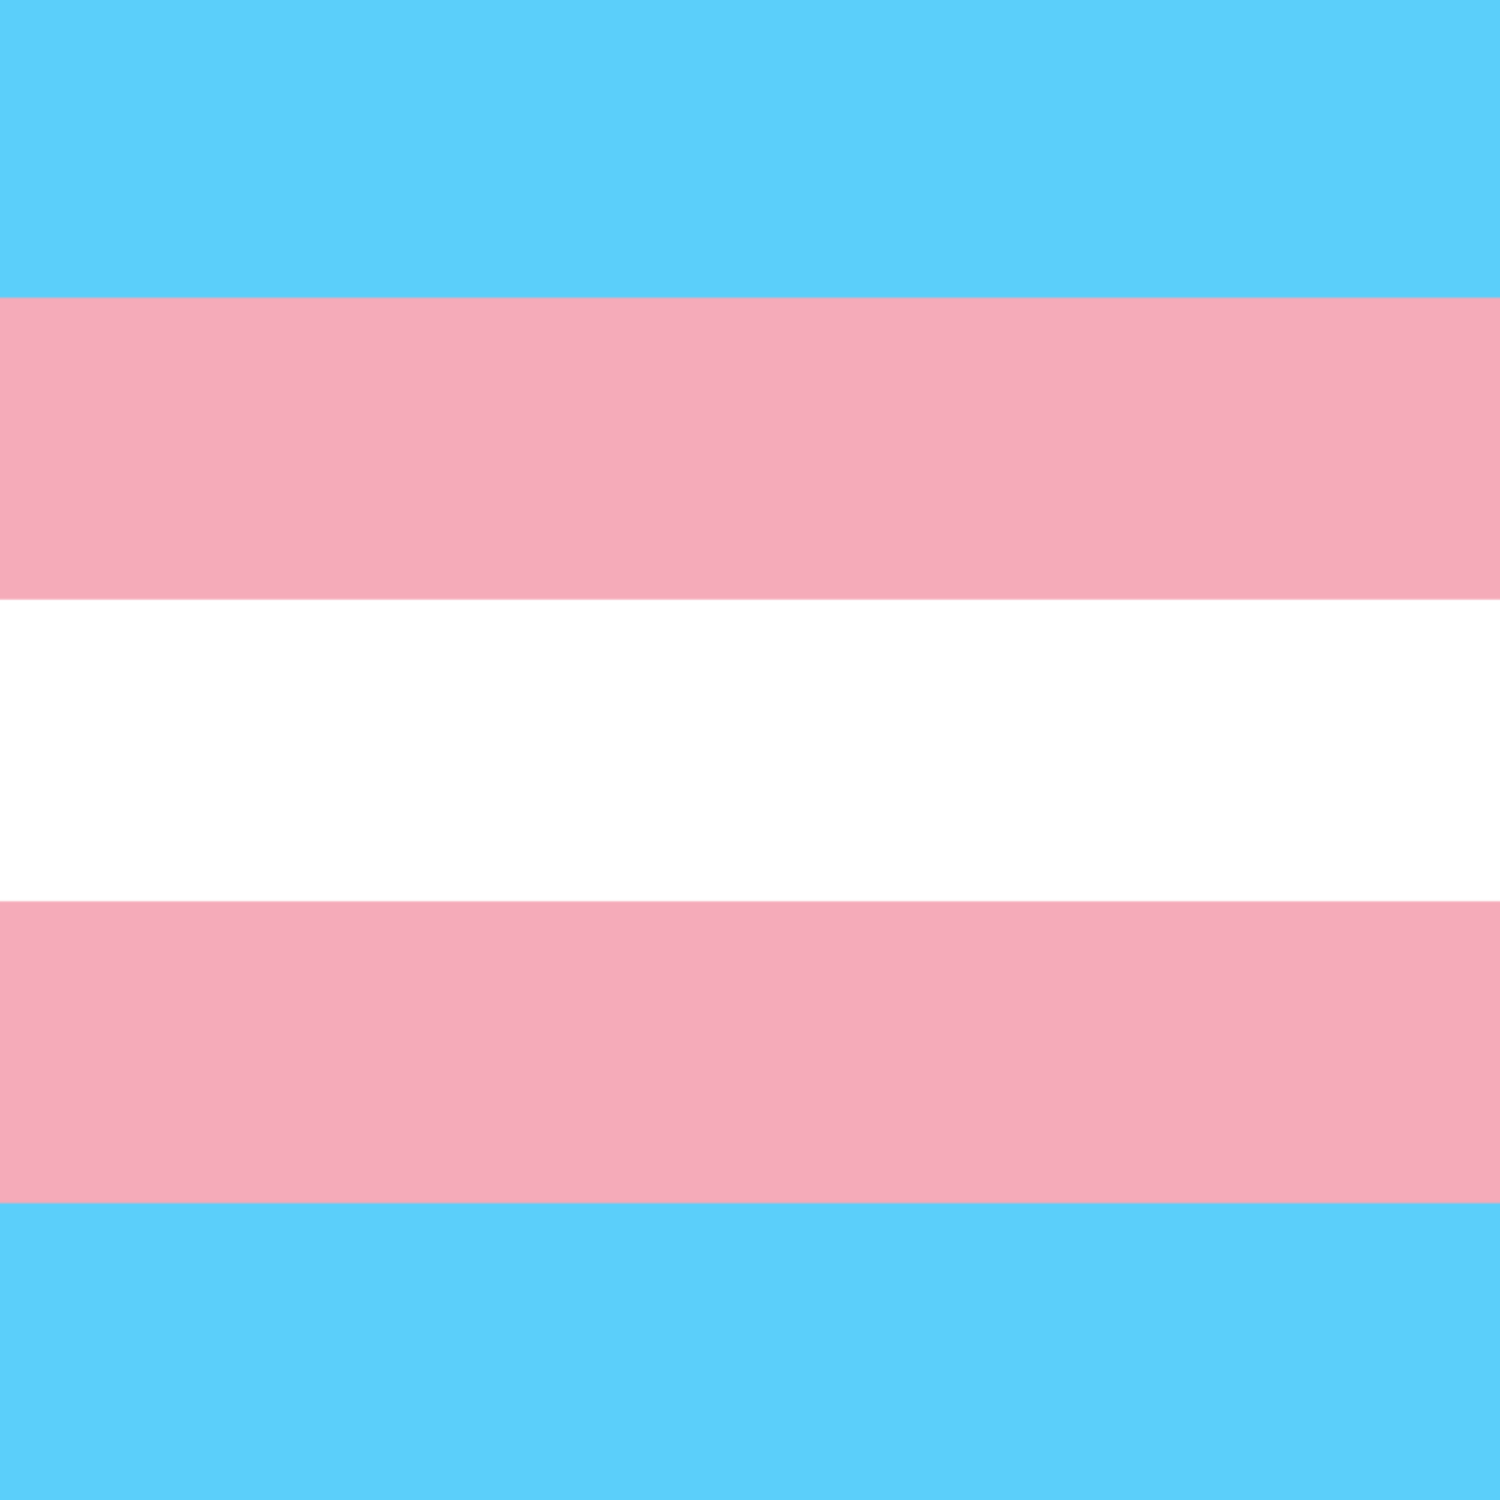 Trans* Pride Flag. Designed by Monica Helms. 1999.